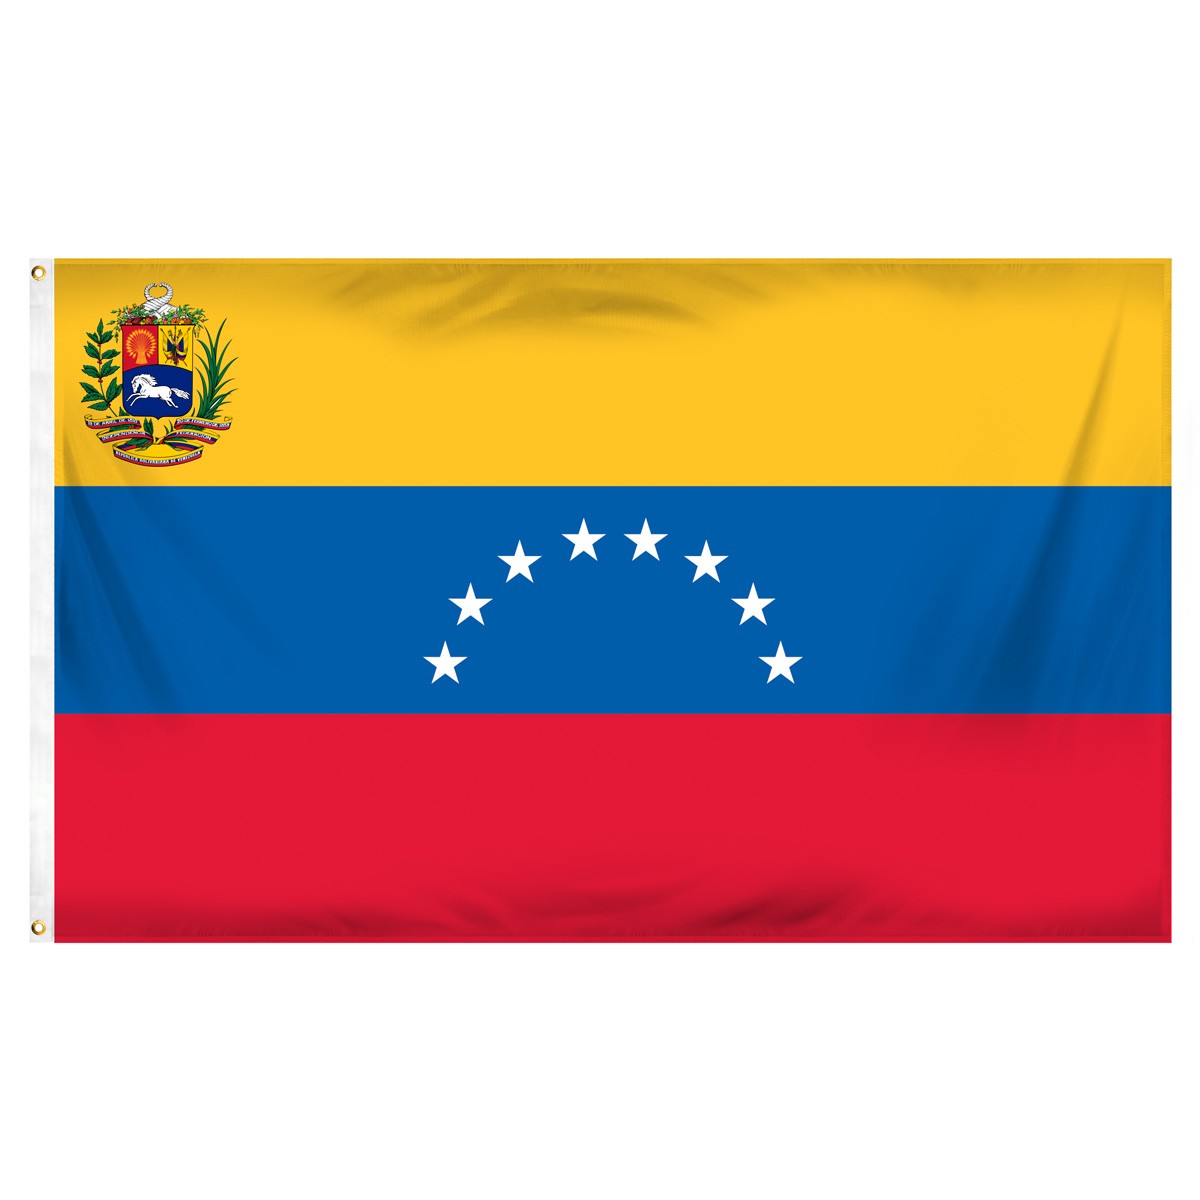 Venezuela Flags and Pennants